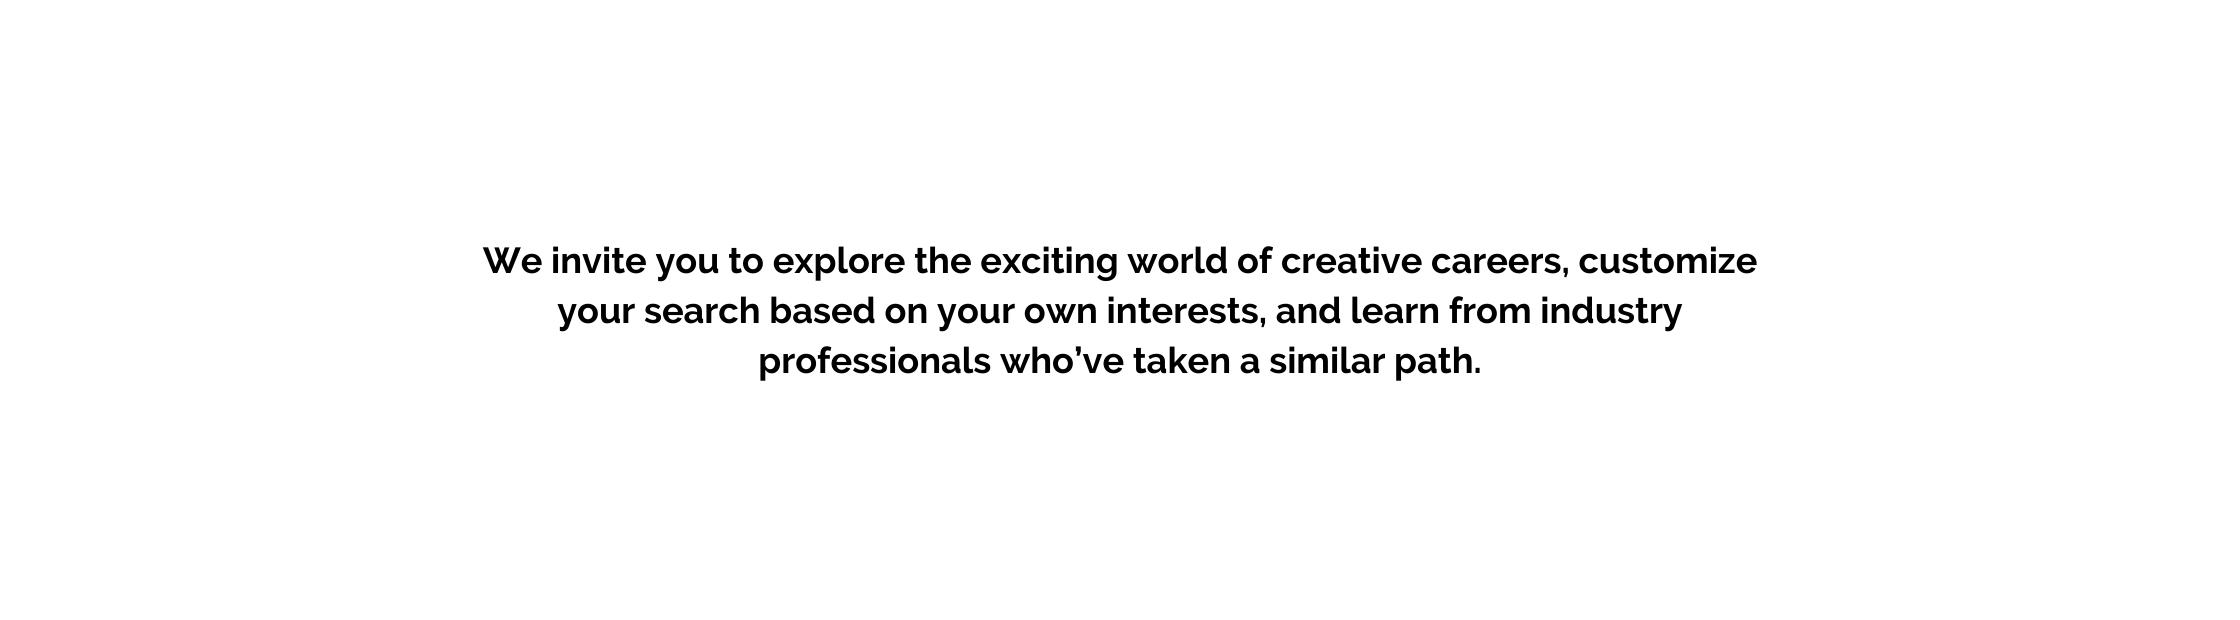 Tungkol sa Creative Careers Online